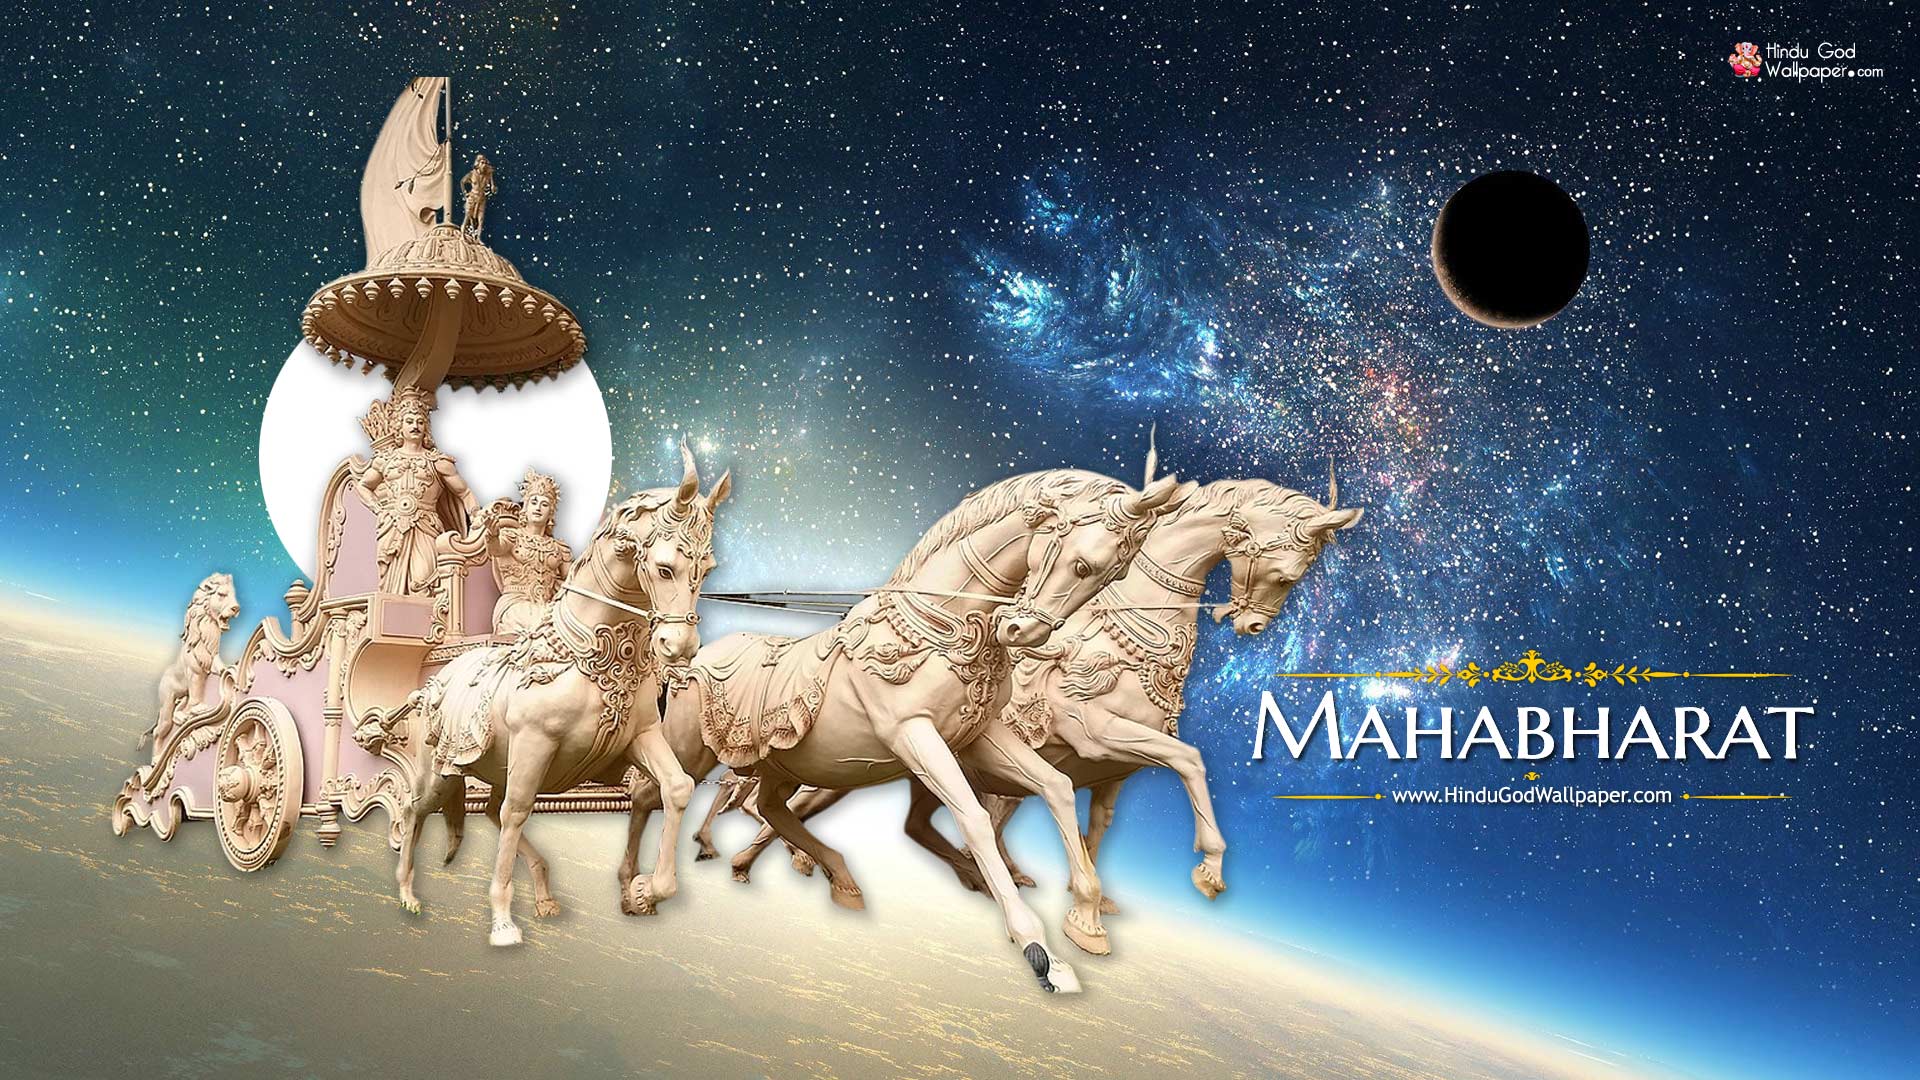 mahabharat star plus all episodes download kickass